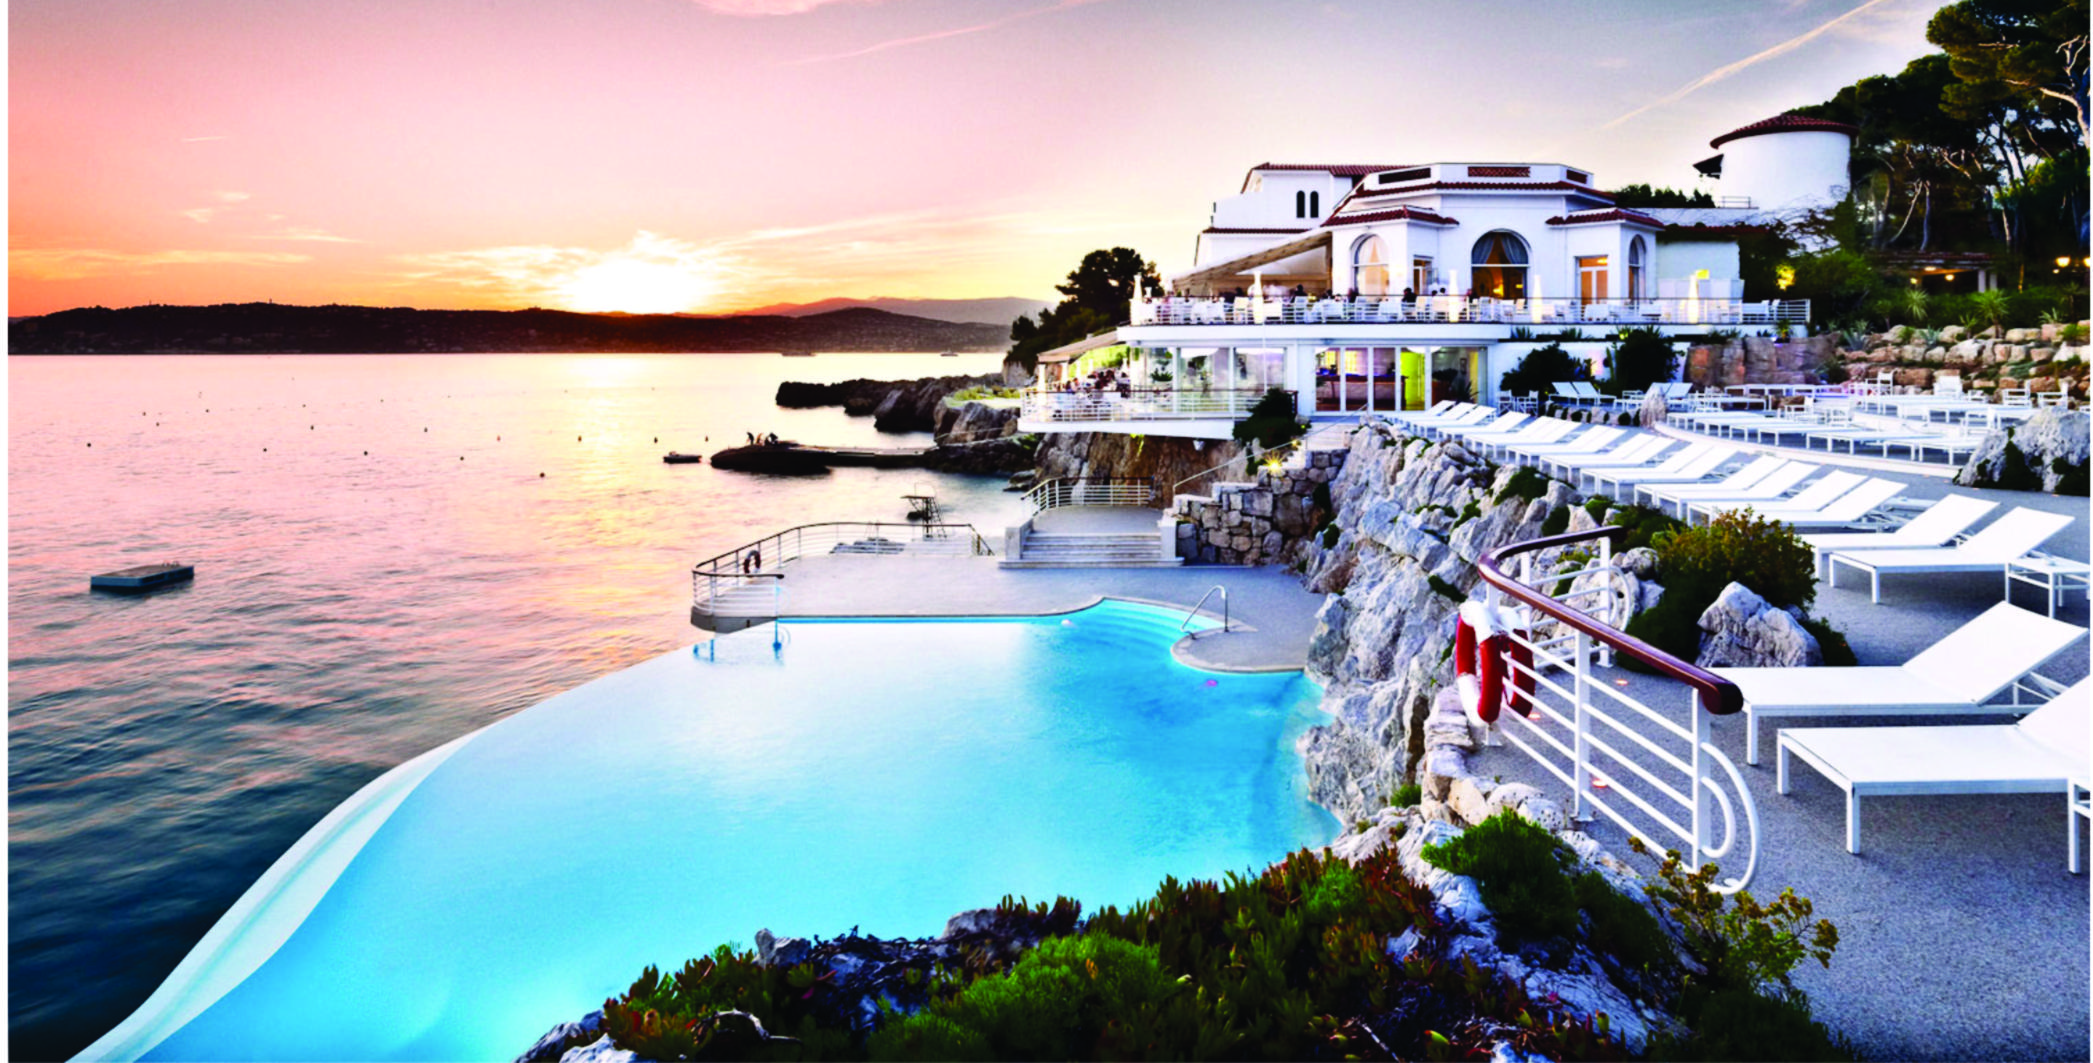 Hotel du Cap Eden Roc, Riviera Francesa - Curso da Vida - Prepare-se ...